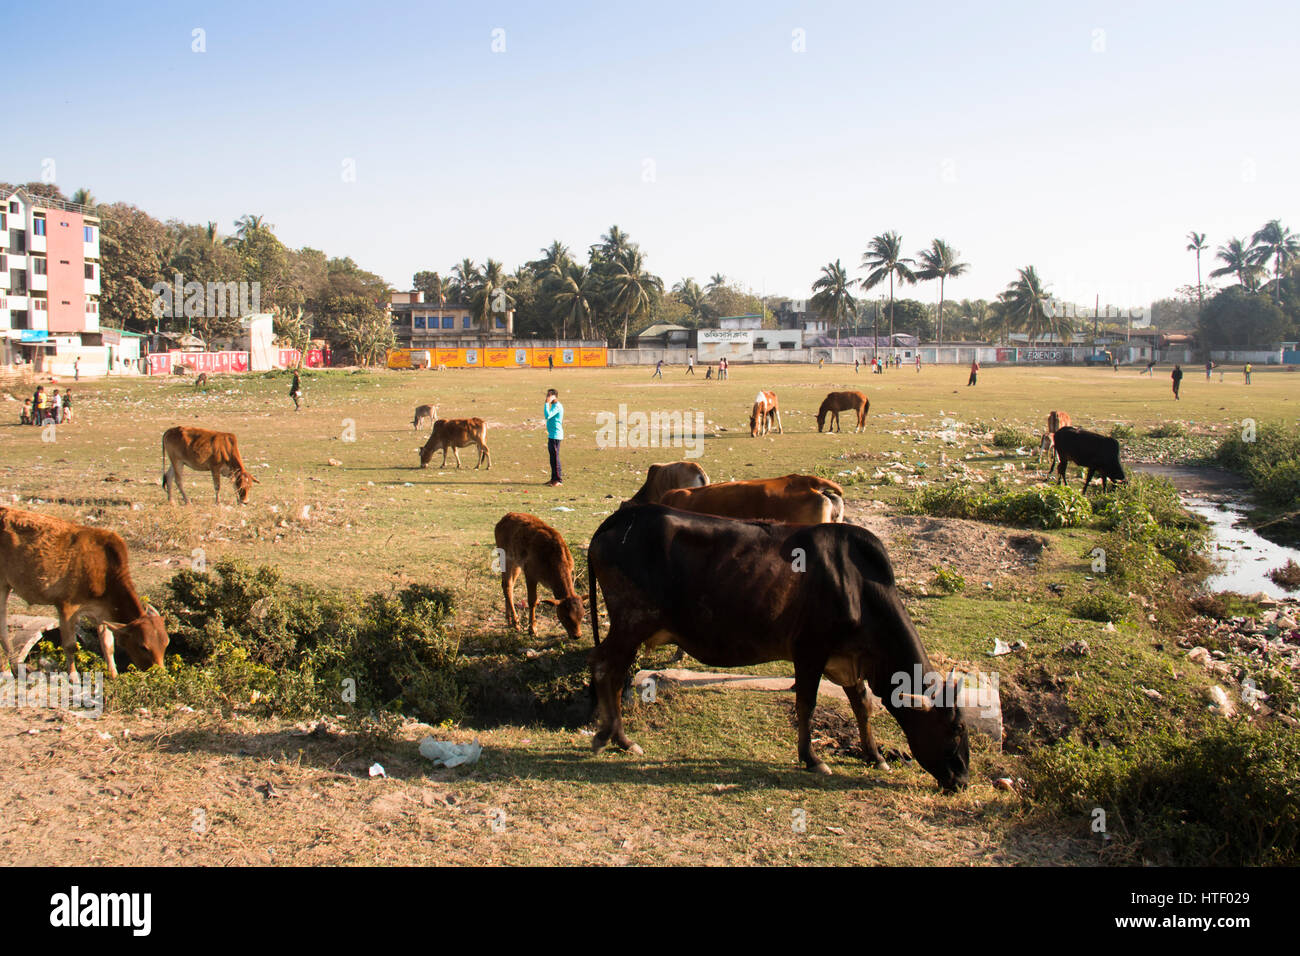 COX'S BAZAR, BANGLADESH - FEBRUARY 2017: Cows on a cricket field in Cox's Bazar at the coast of Bangladesh Stock Photo